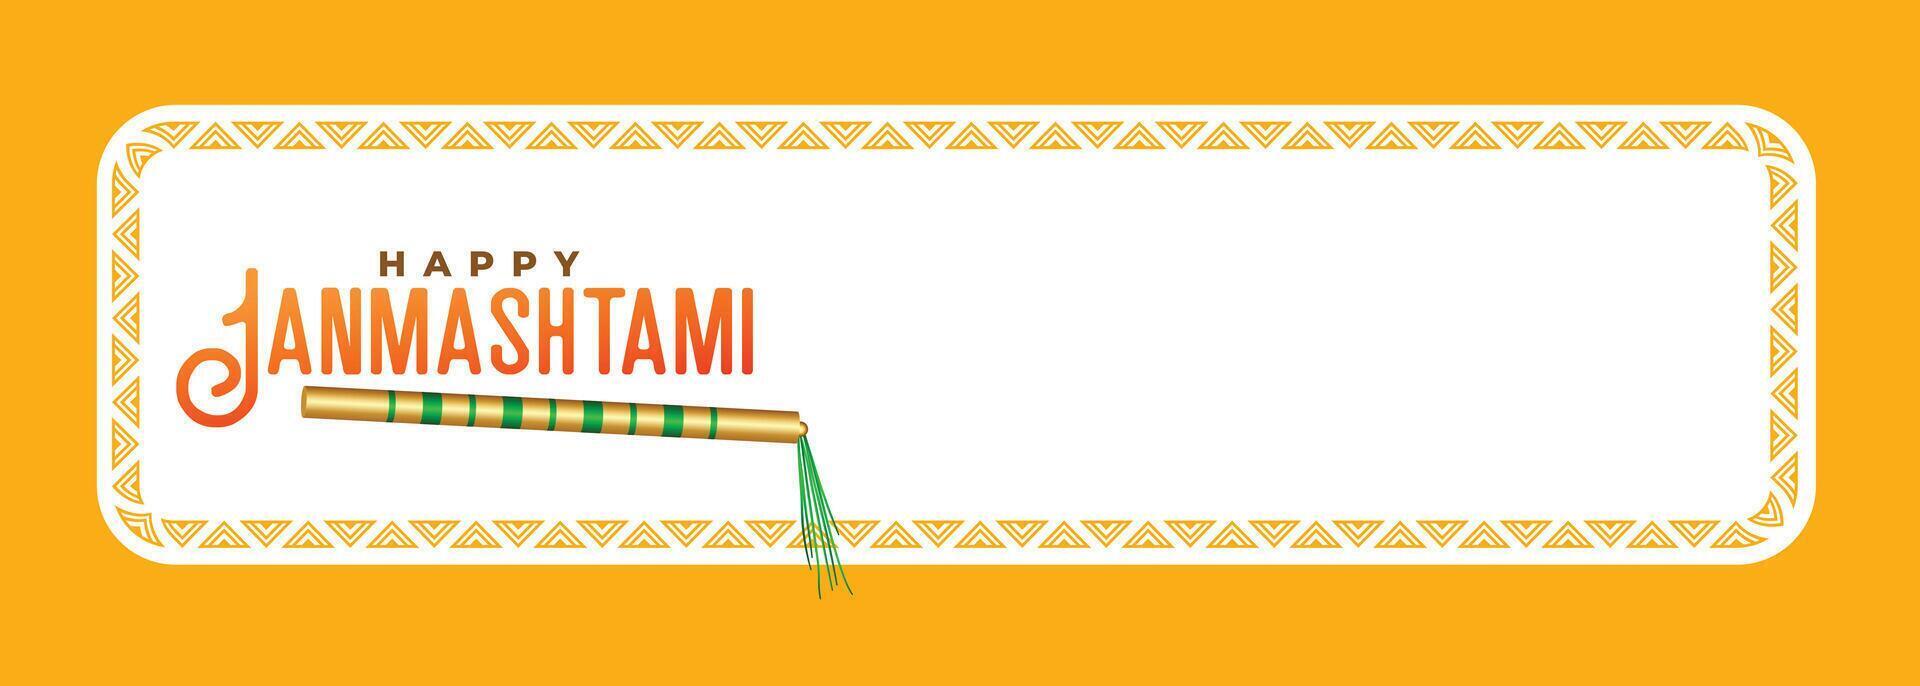 happy janmashtami banner with lord krishna flute vector